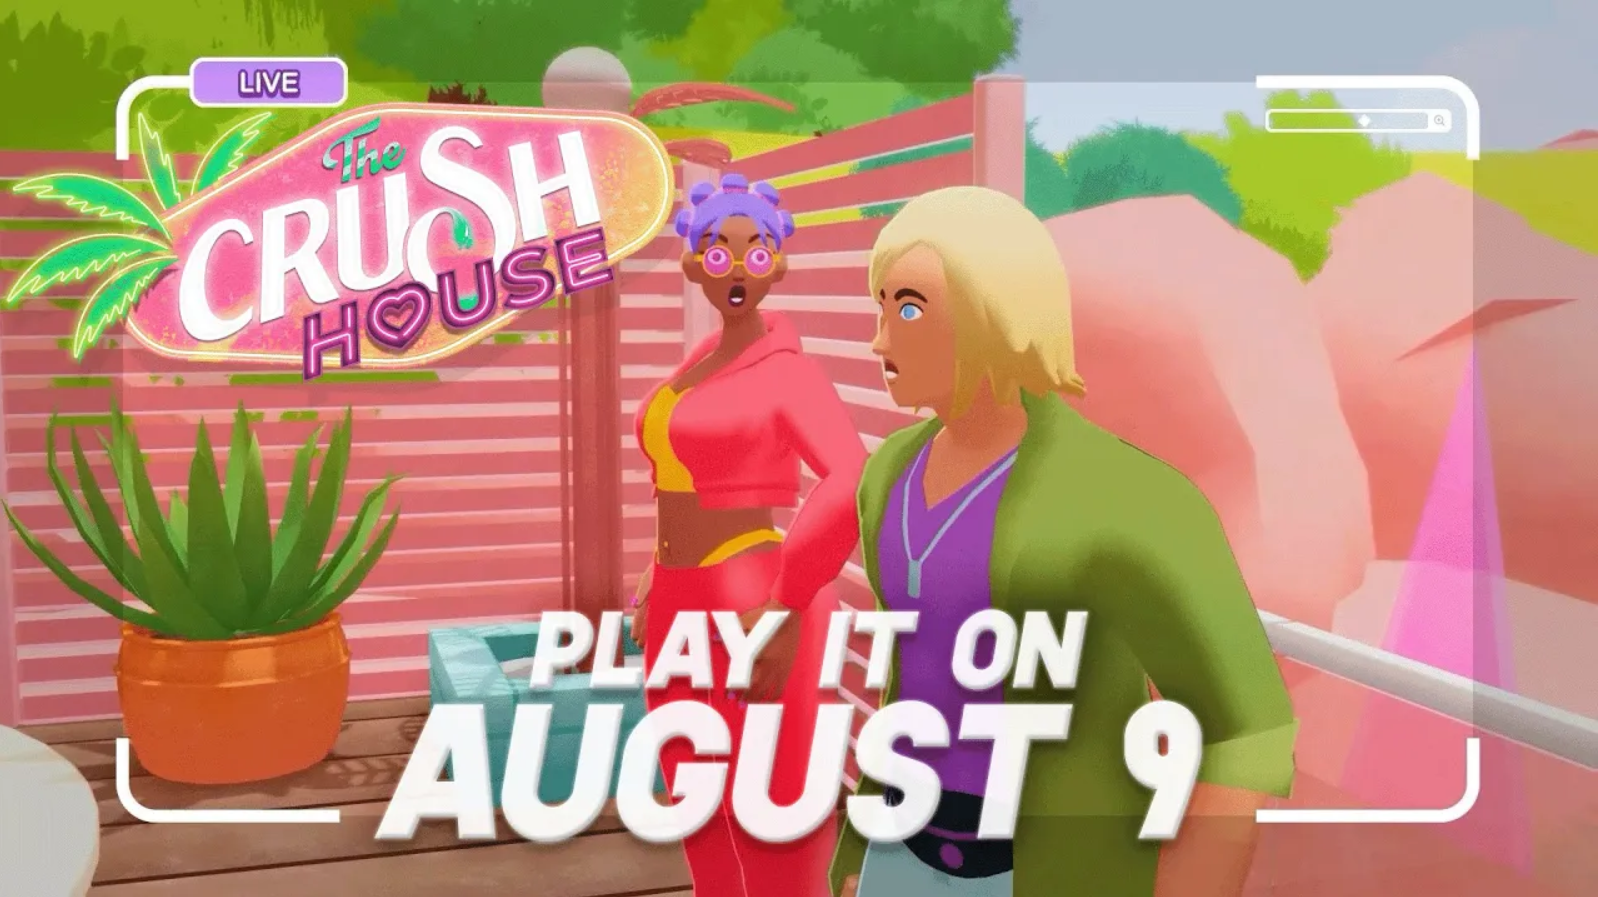 The Crush House - Key Art